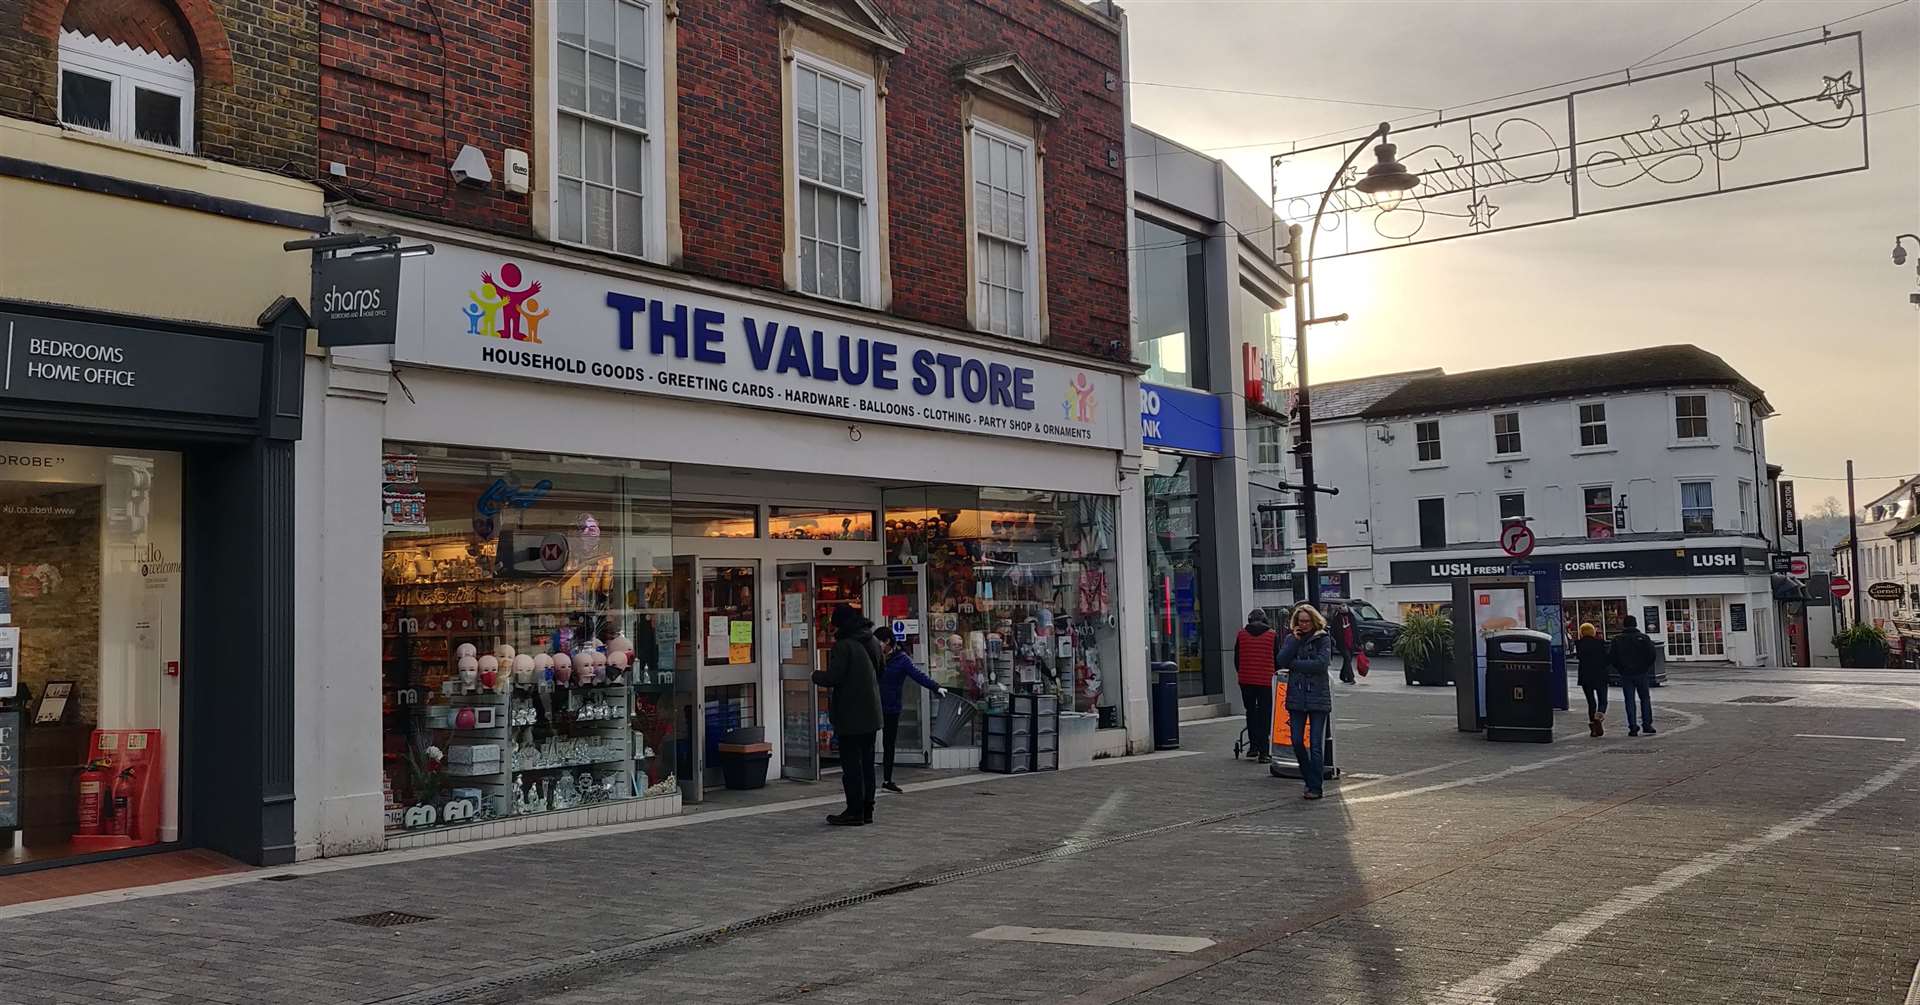 The Value Store in Week Street, Maidstone